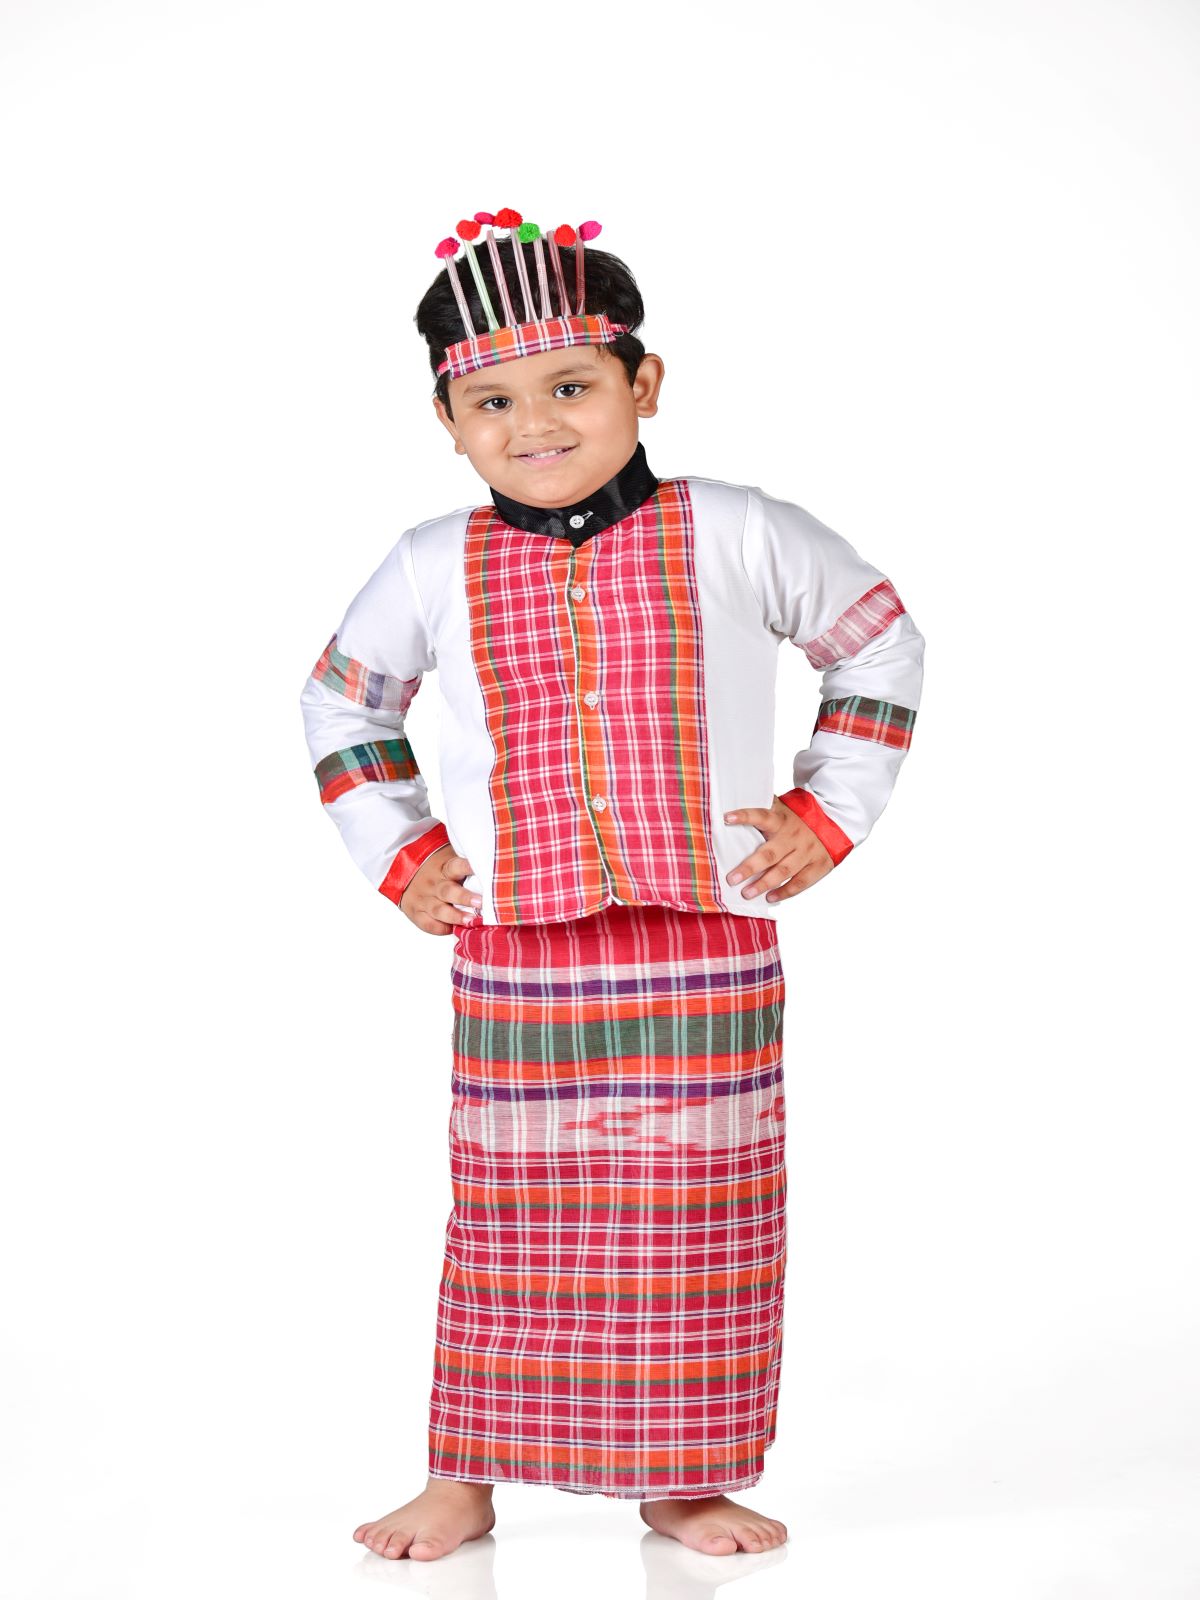 Aloo Arunachal Pradesh India Galo Women Stock Photo 1734546740 |  Shutterstock